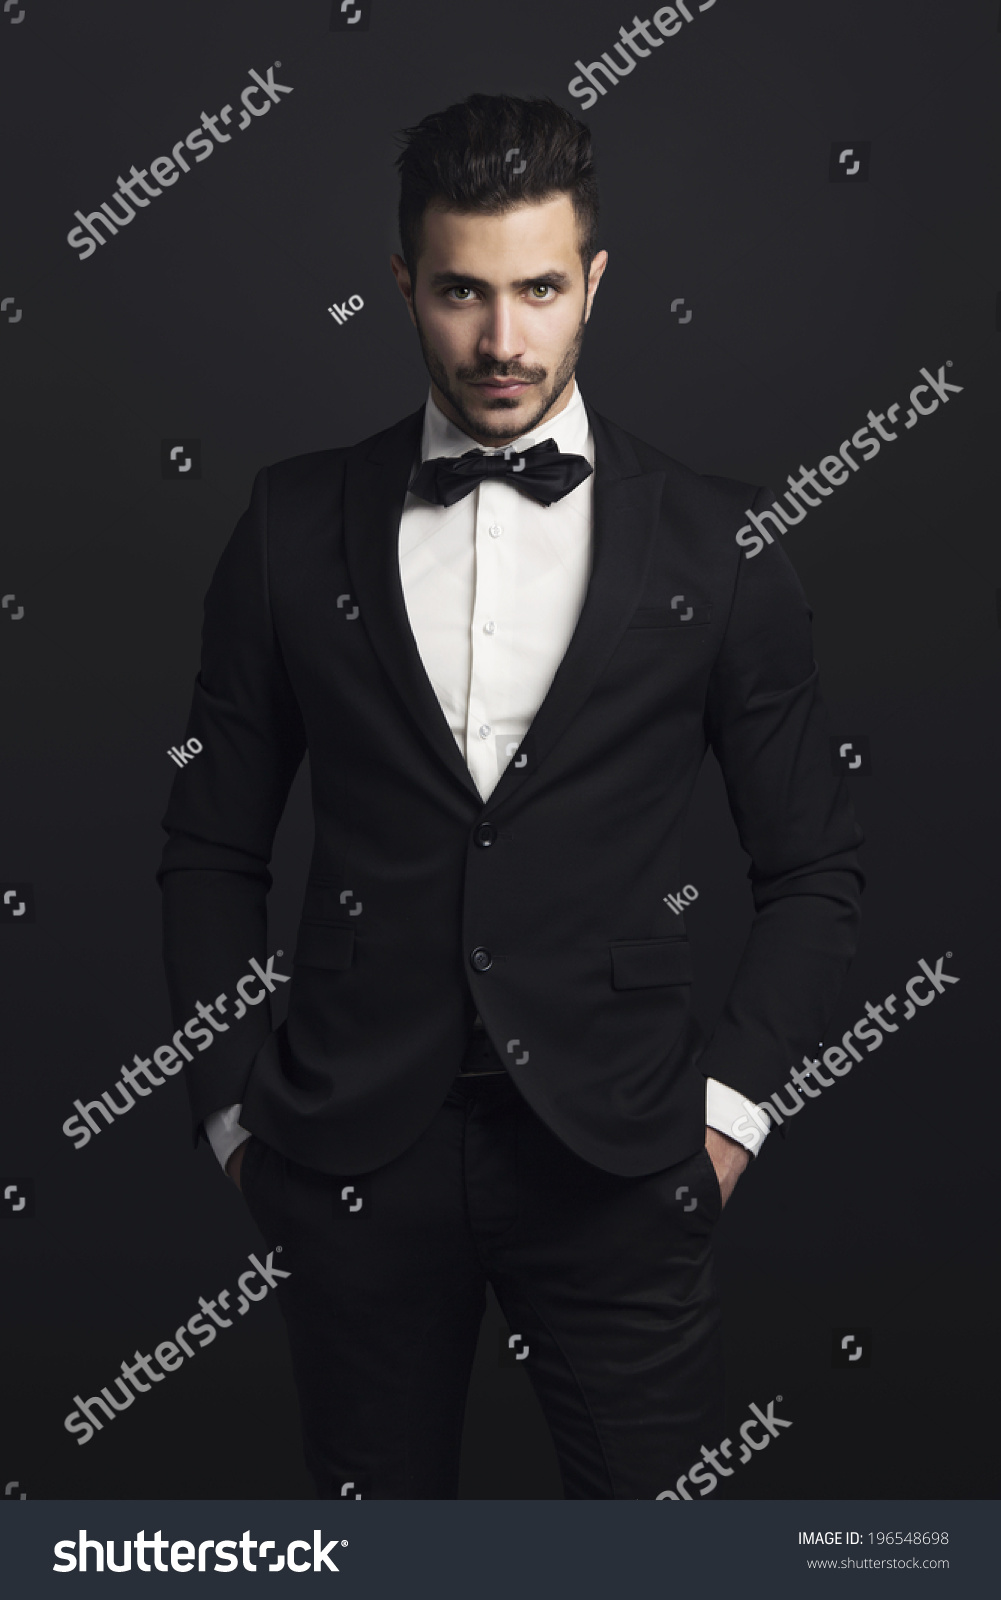 Portrait Of A Beautiful Latin Man Smiling Wearing A Tuxedo Stock Photo ...